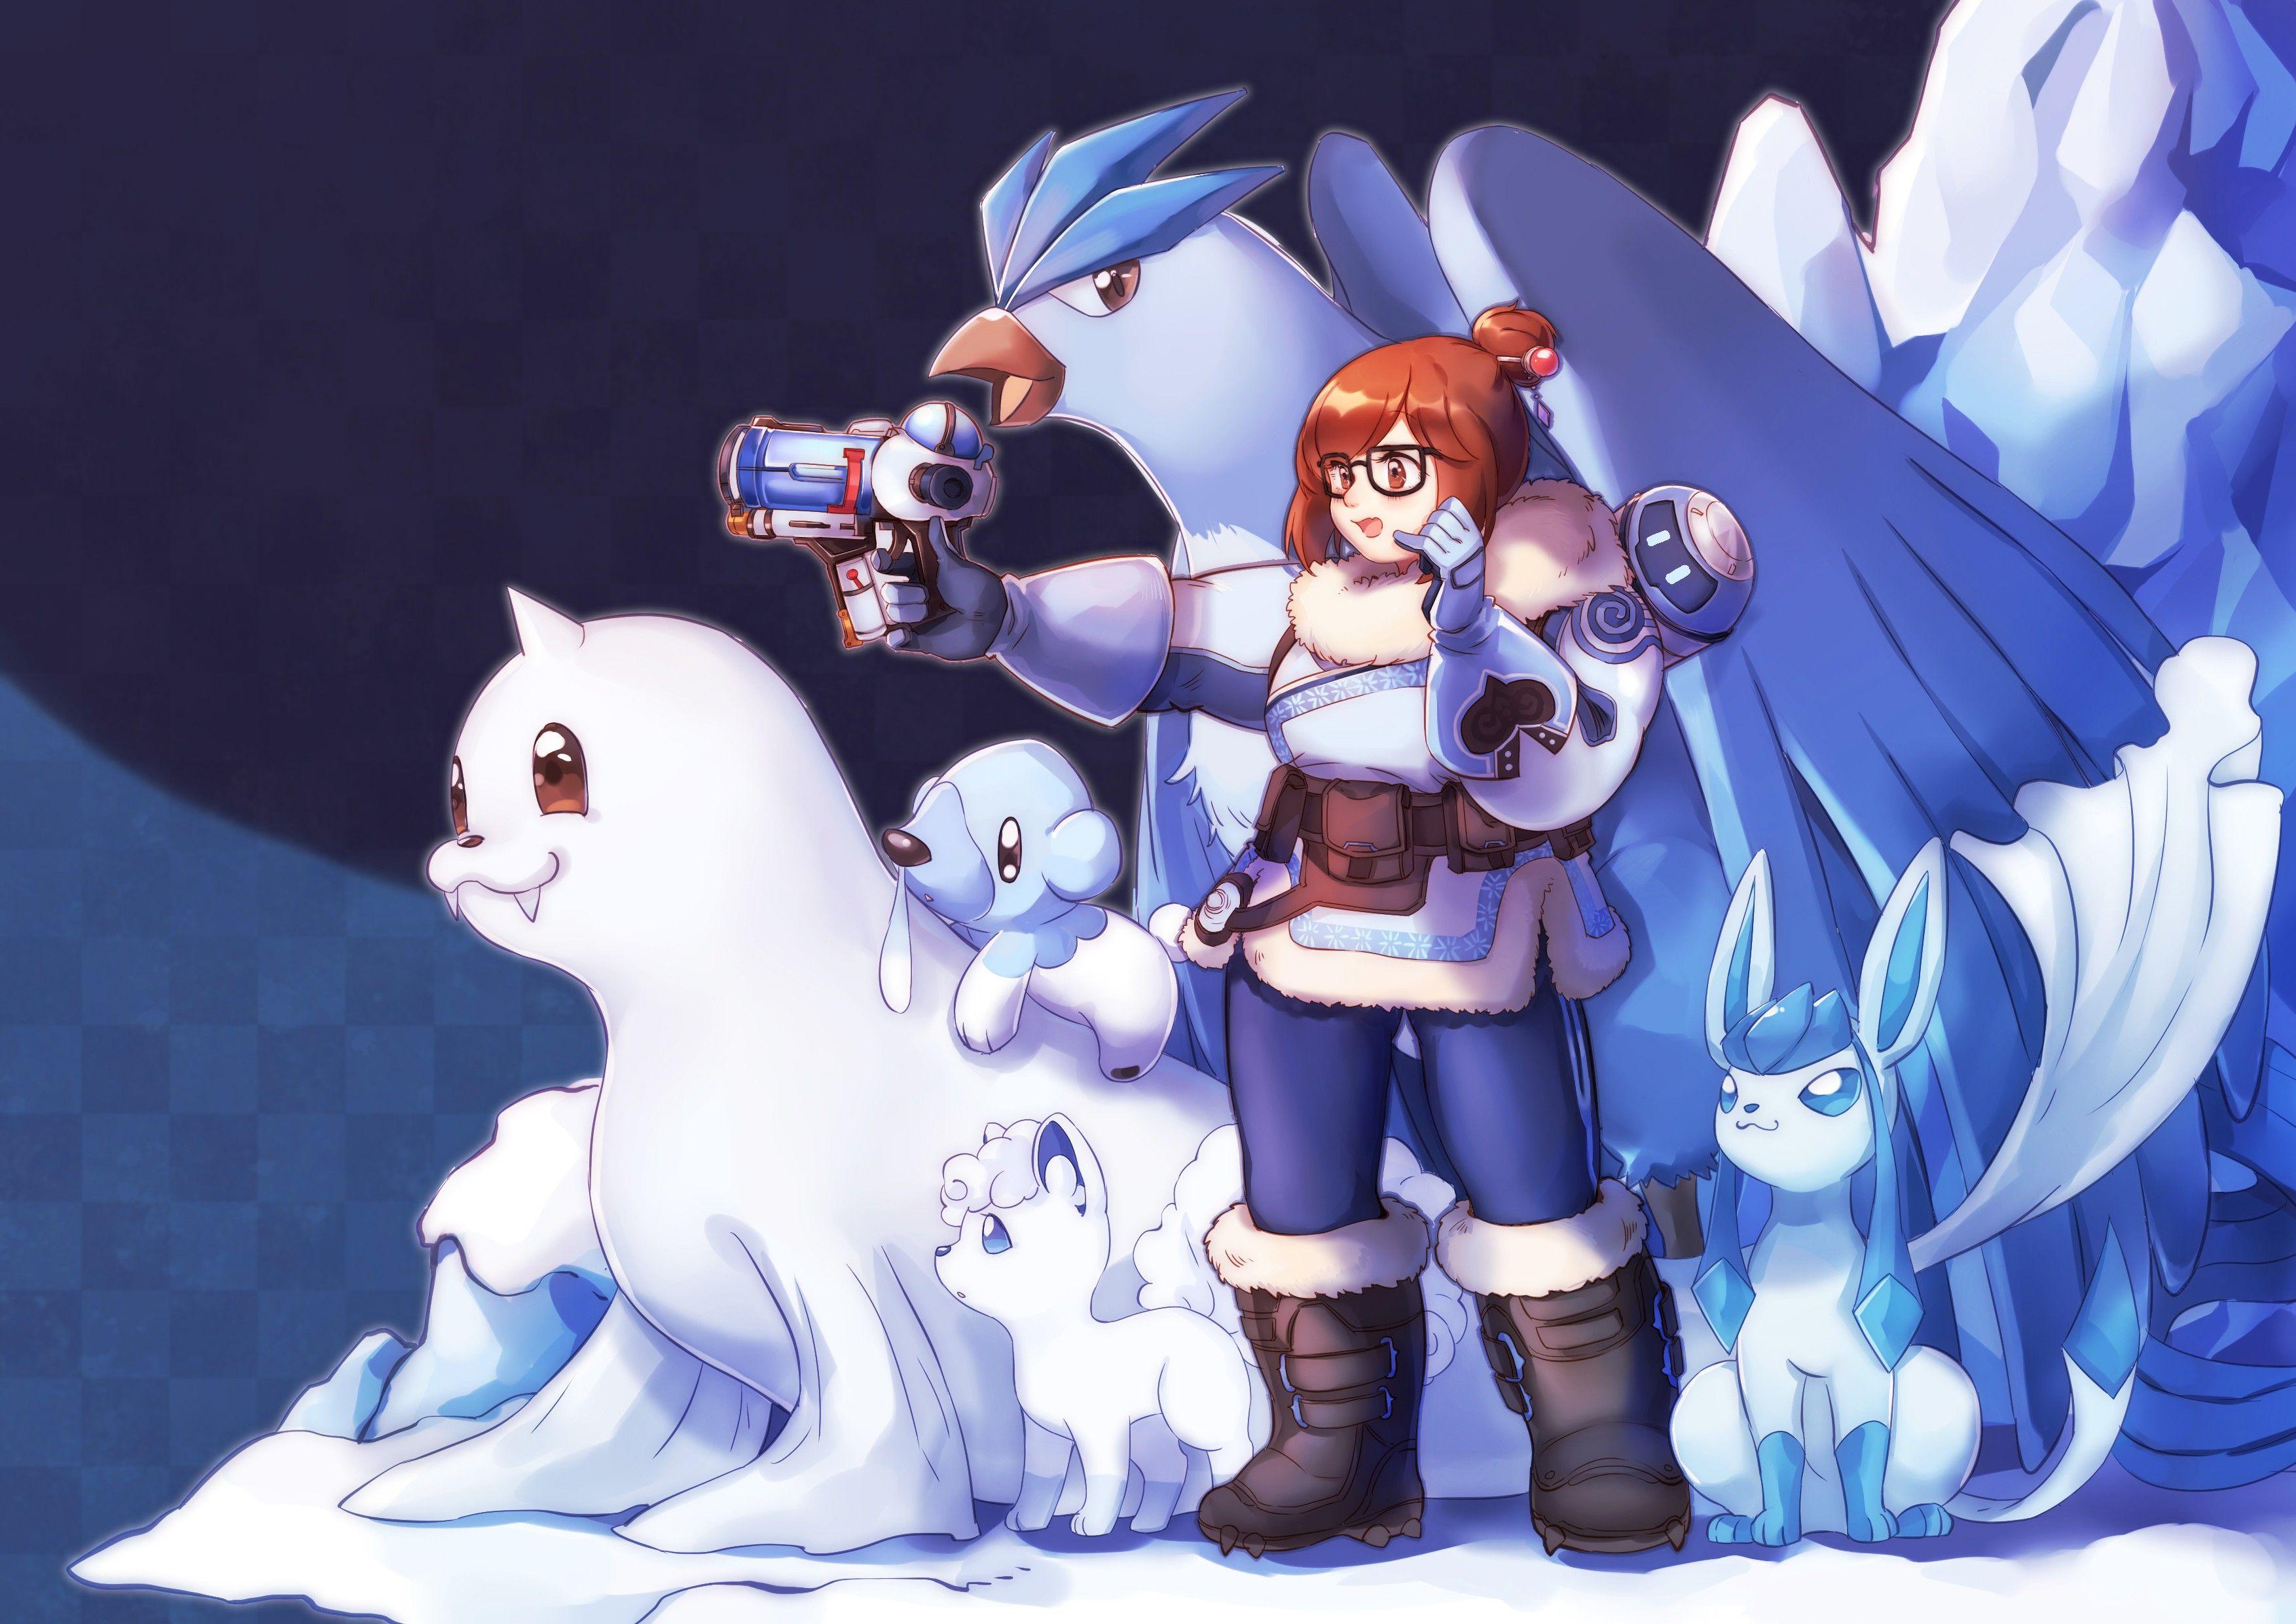 Cubchoo (Pokémon) HD Wallpaper and Background Image